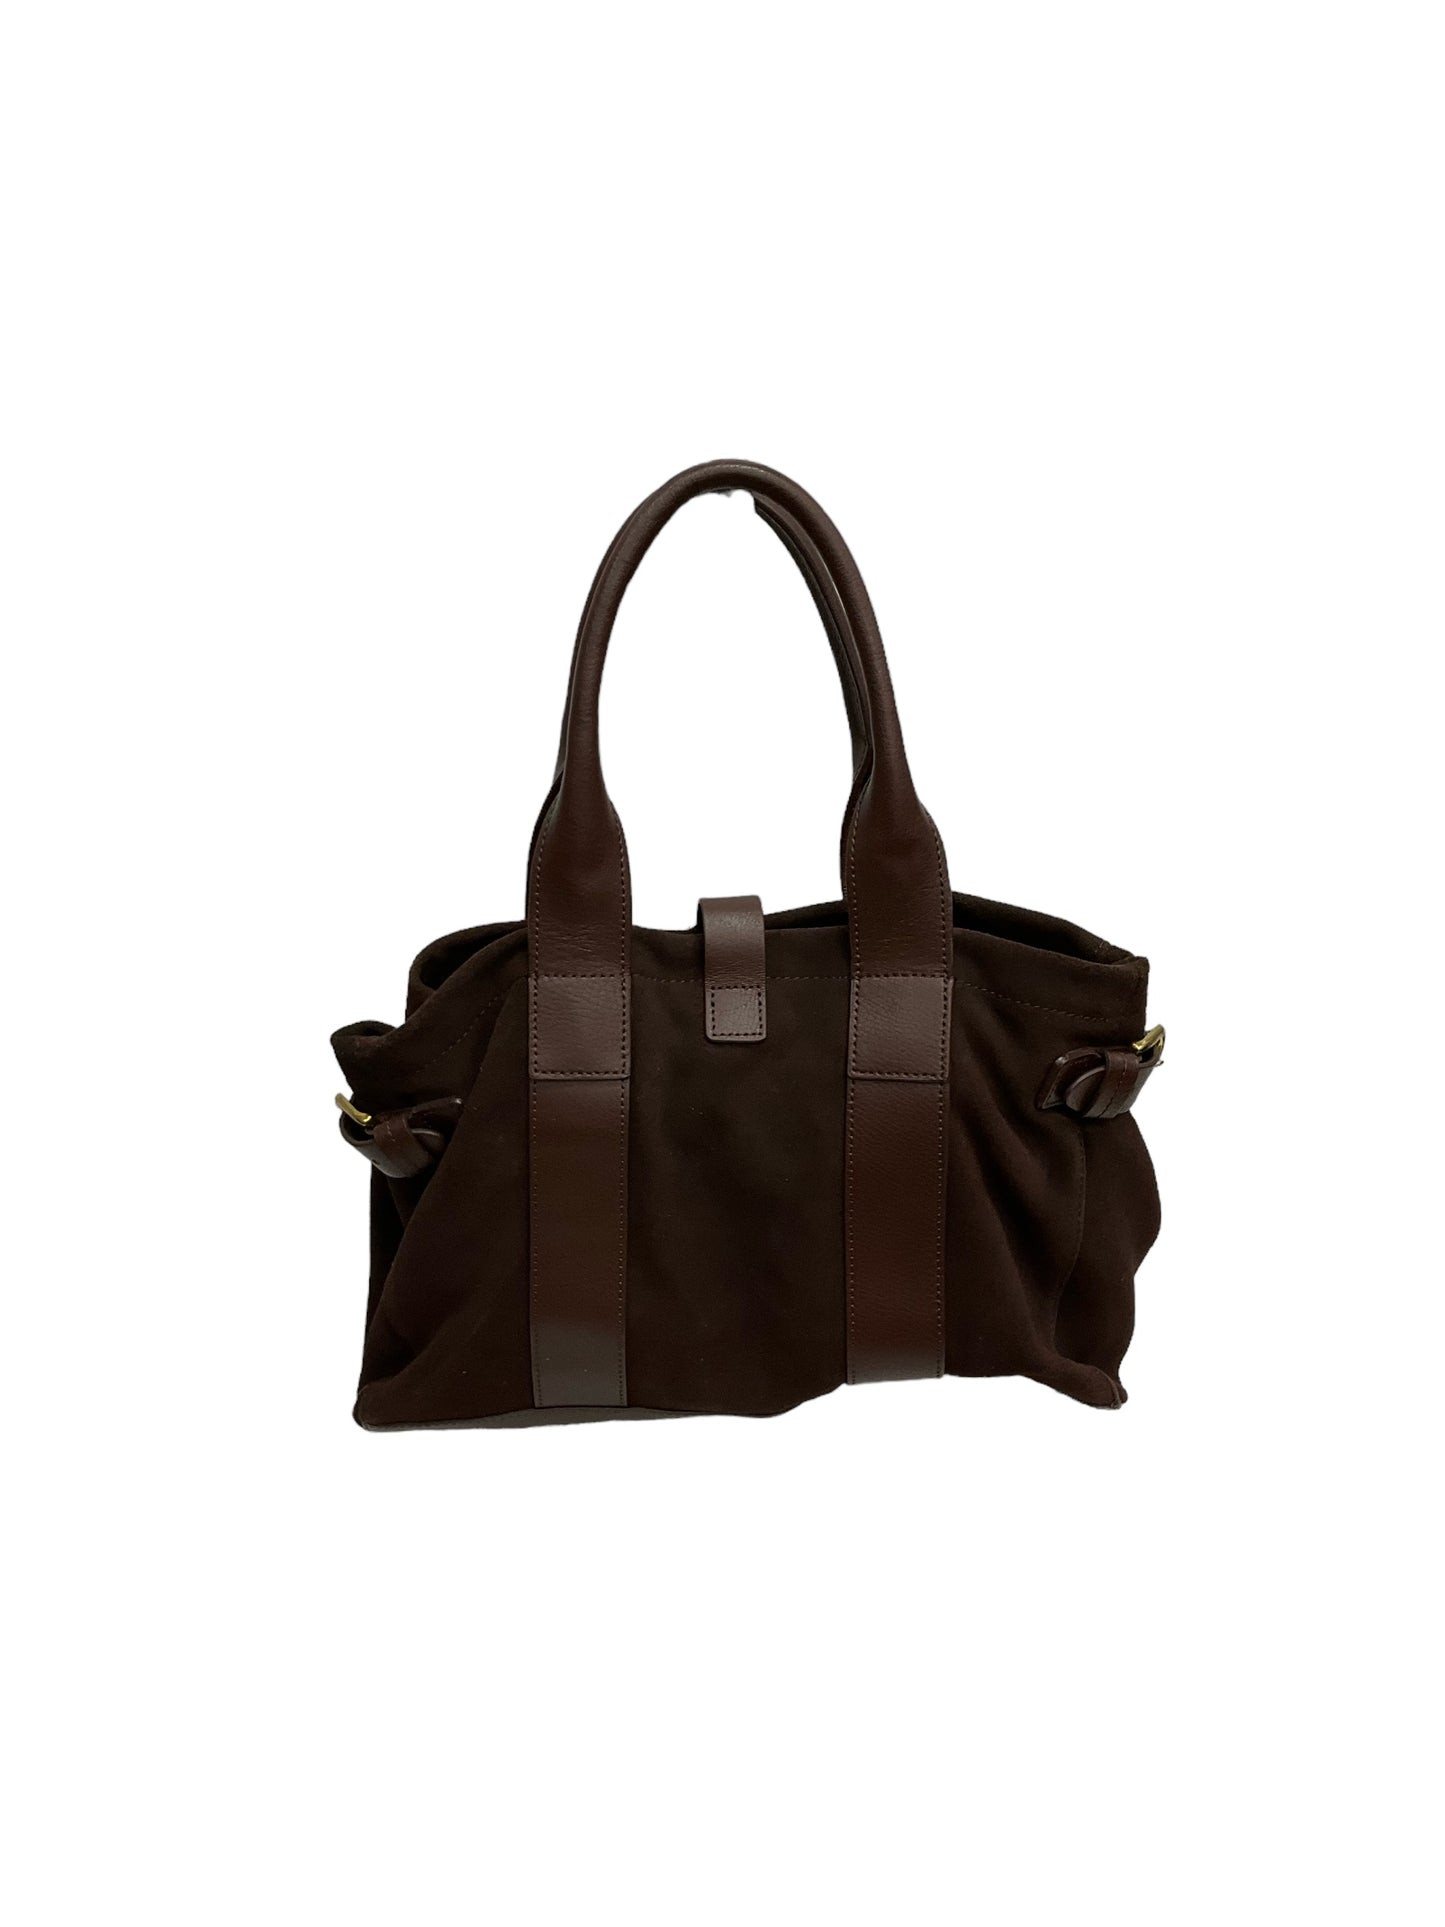 Handbag By Lands End  Size: Medium